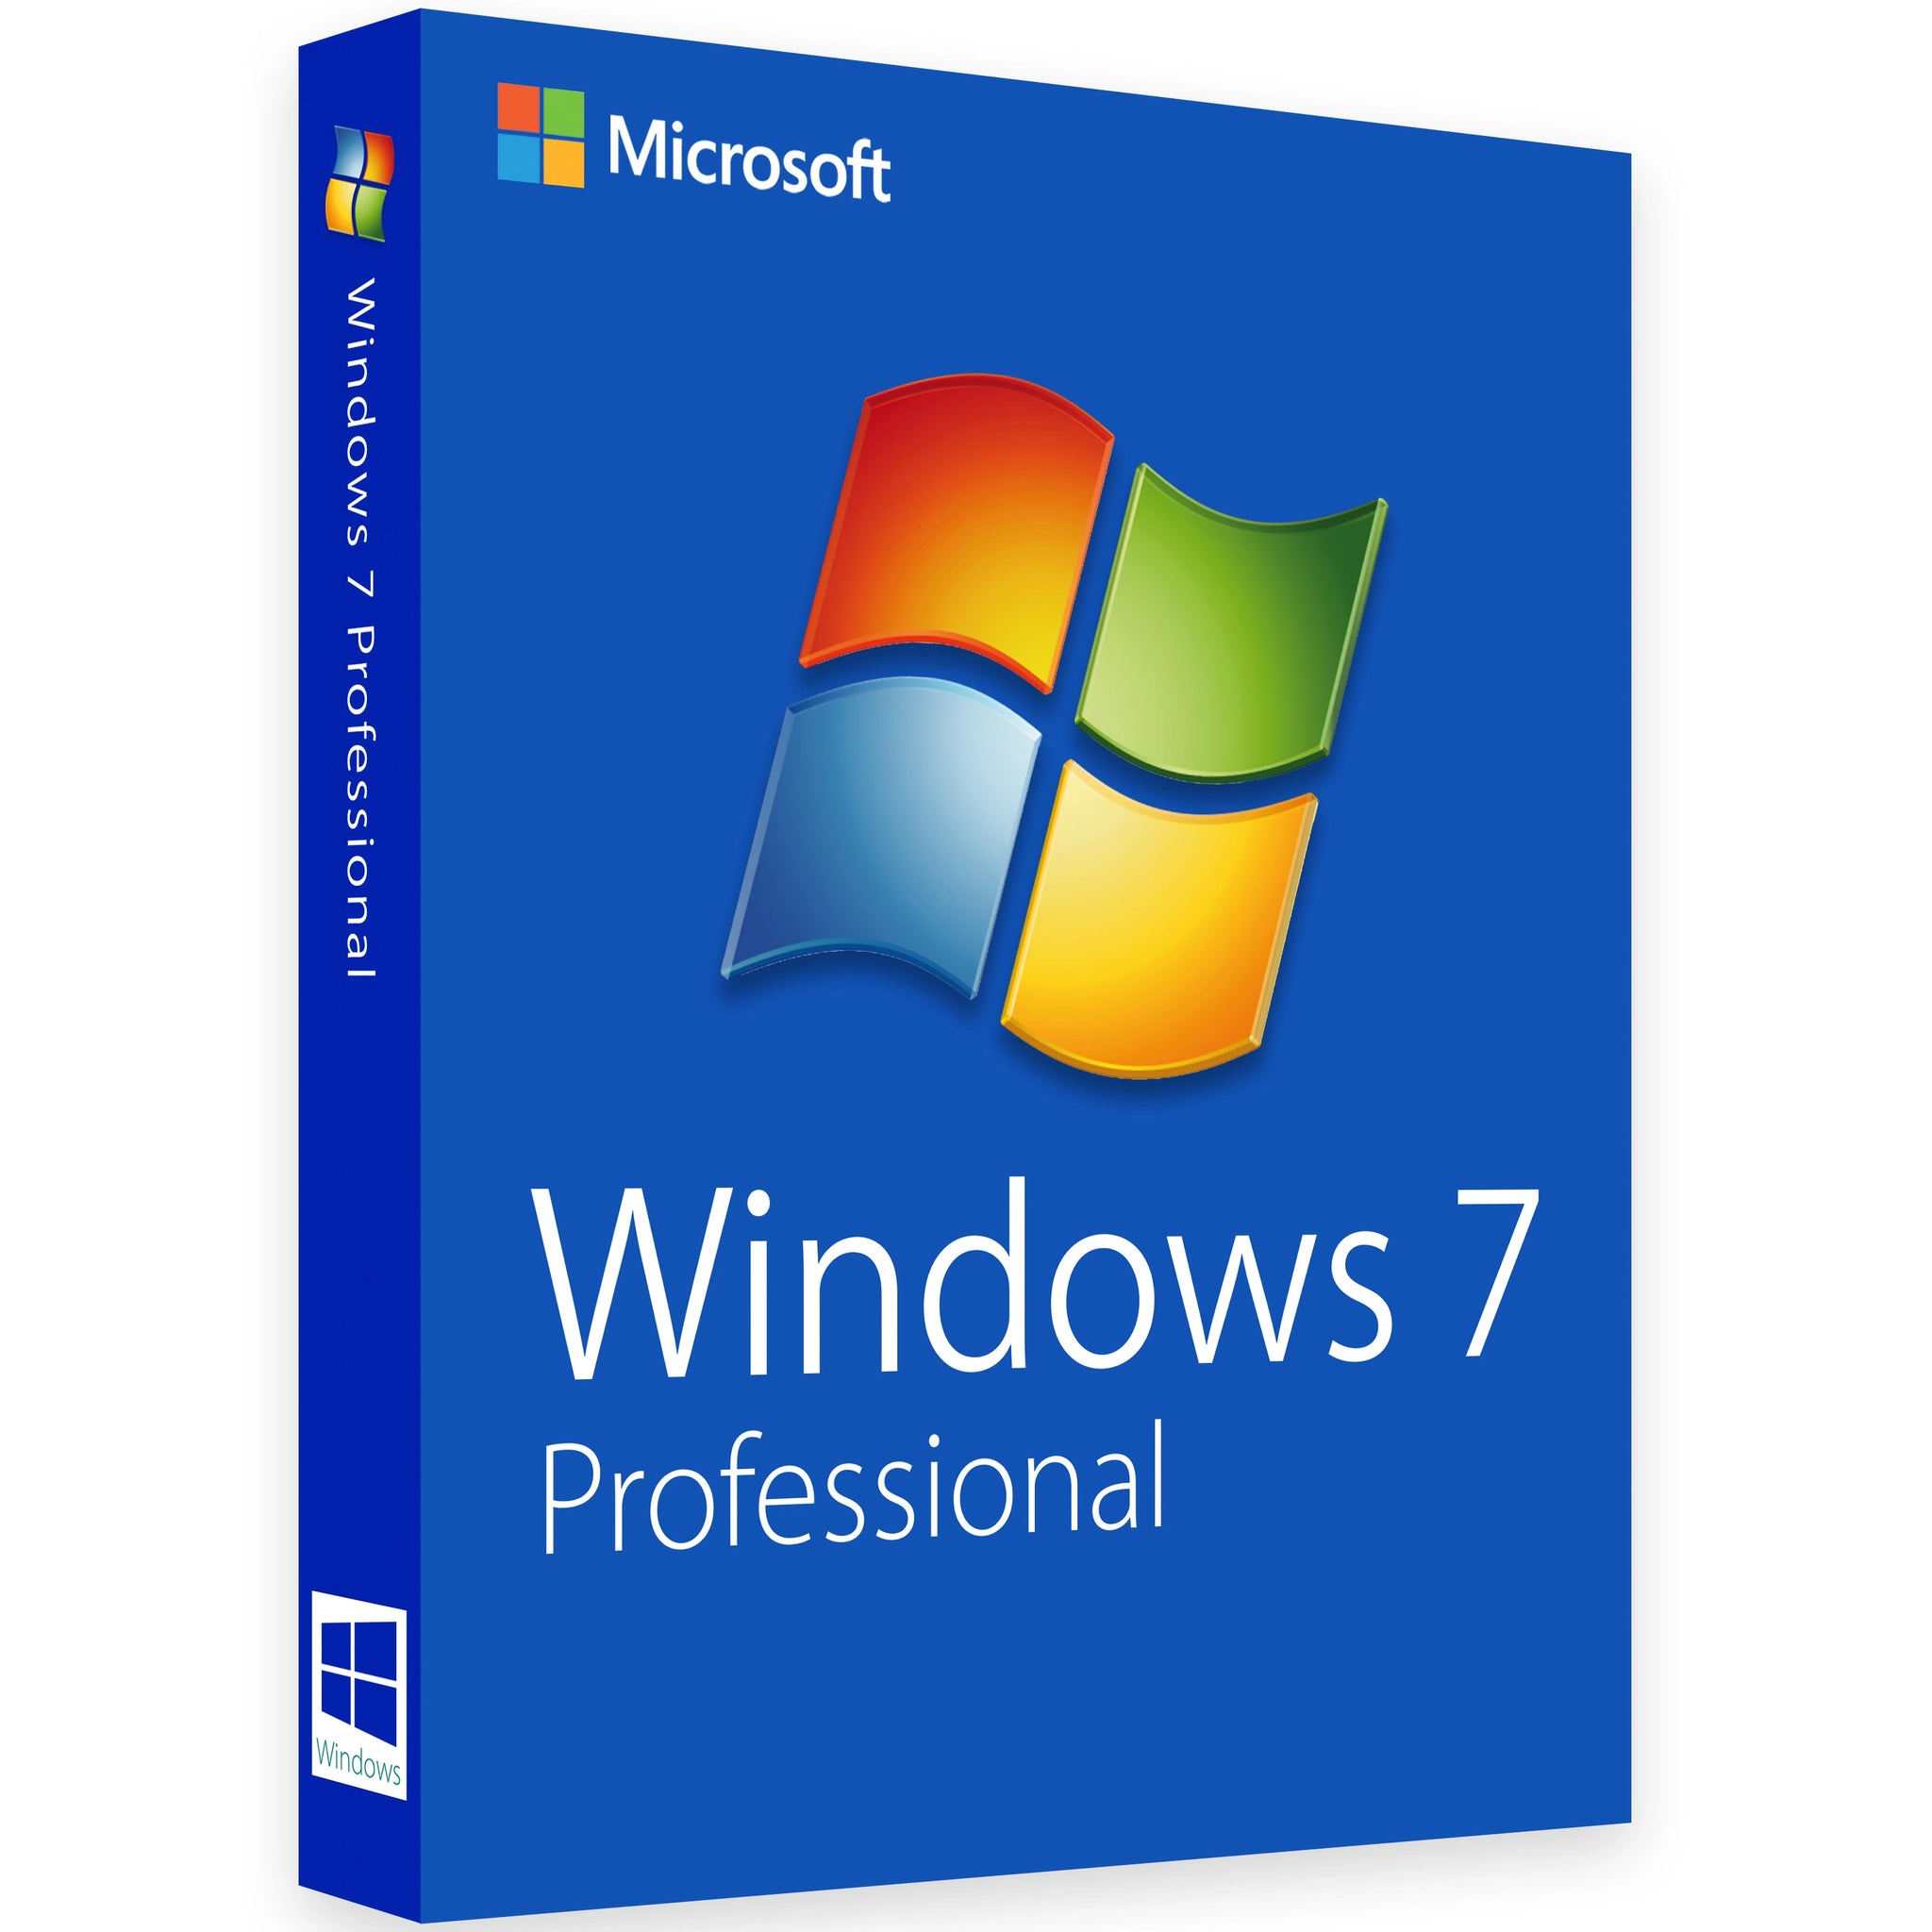 Microsoft Windows 7 Professional - Lifetime License Key for 1 PC